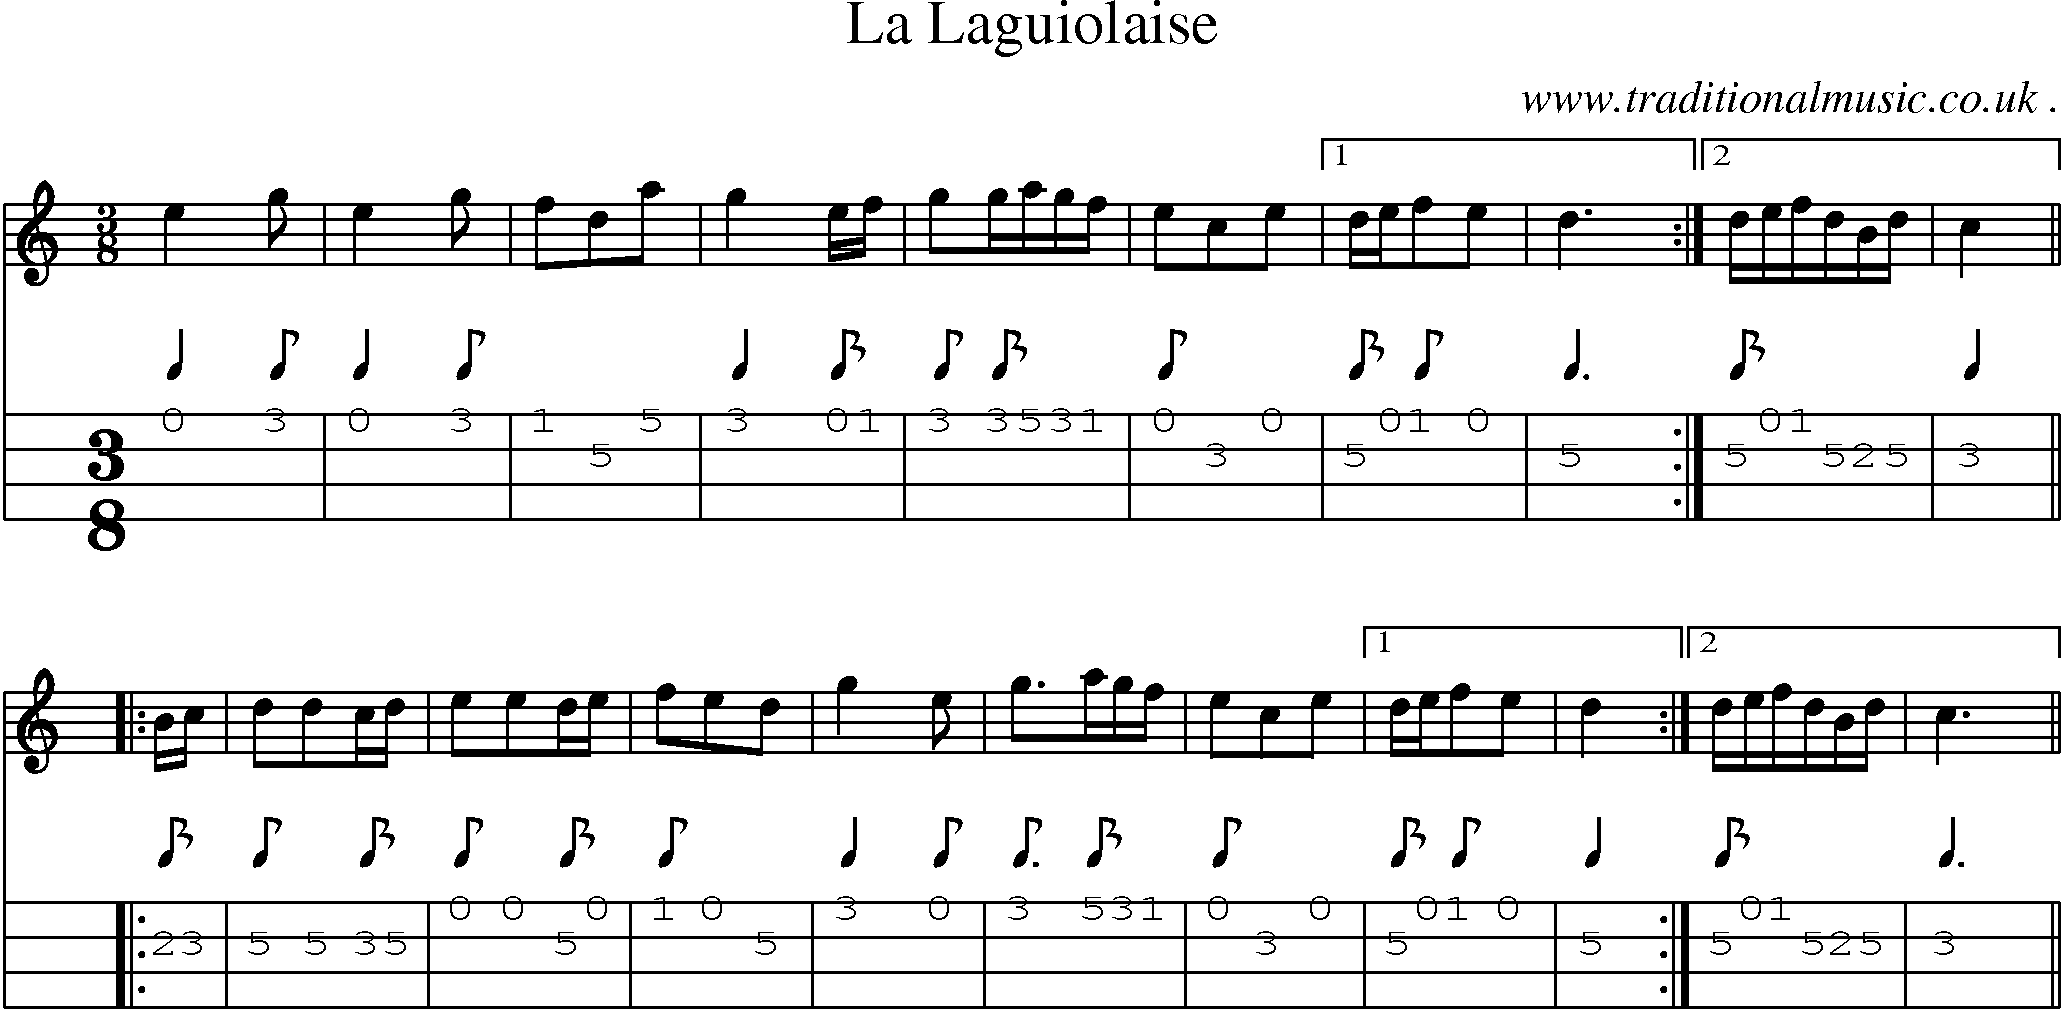 Sheet-Music and Mandolin Tabs for La Laguiolaise